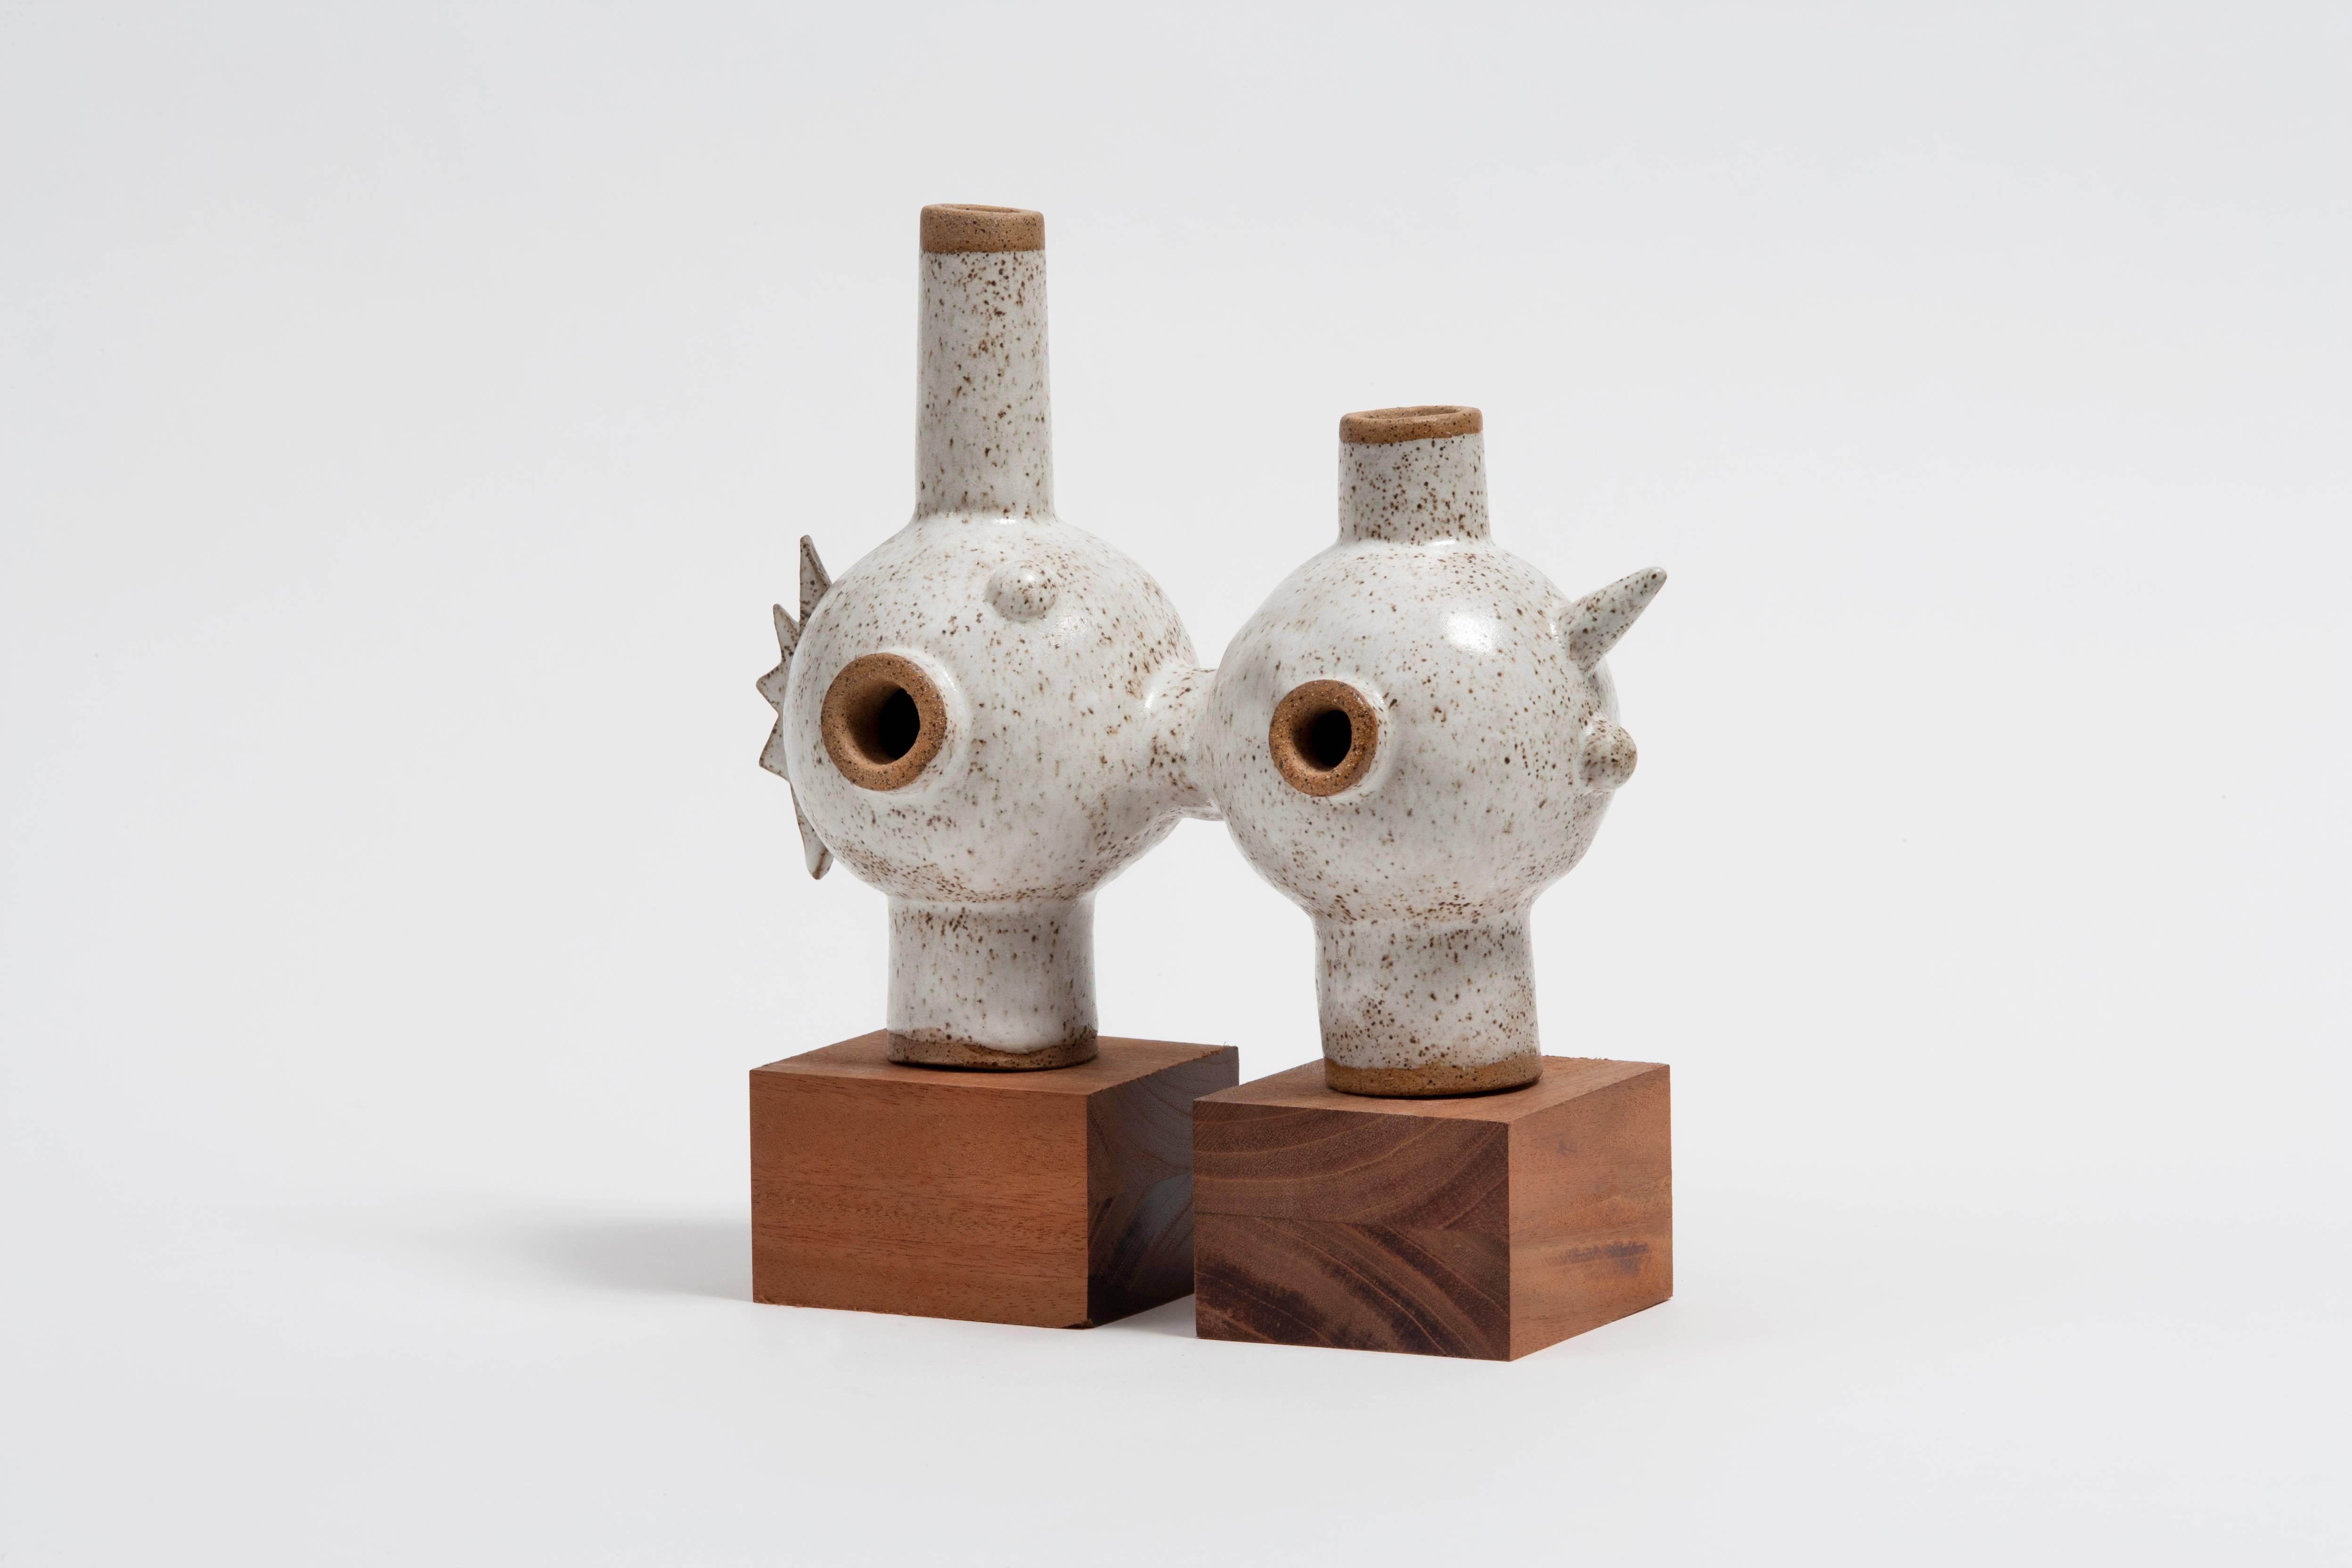 Ceramic sculpture by Carlos Otero, 2016.

Carlos Otero.
Untitled, 2015.
Ceramic.
Measures: 9.5” H x 8.5” W x 4.25” D.
Pedestals: 3.65” L x 3.25” W x 2.25” H.

Carlos Otero is an architect, designer and sculptor based in New York City. Born